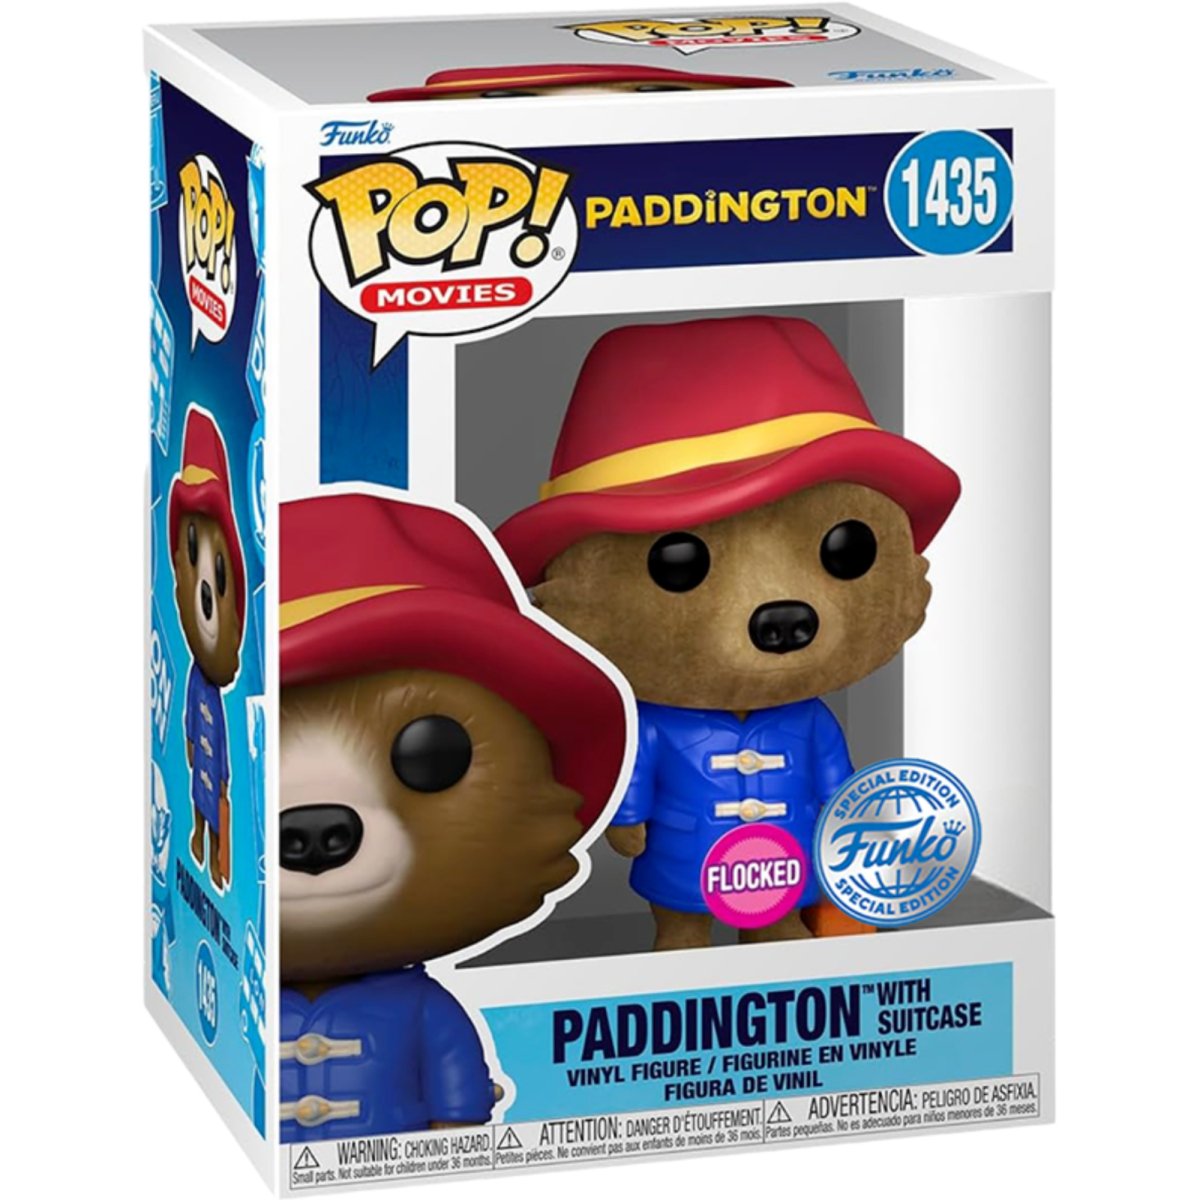 Paddington - Paddington with Suitcase (Flocked Special Edition) #1435 - Funko Pop! Vinyl Movies - Persona Toys